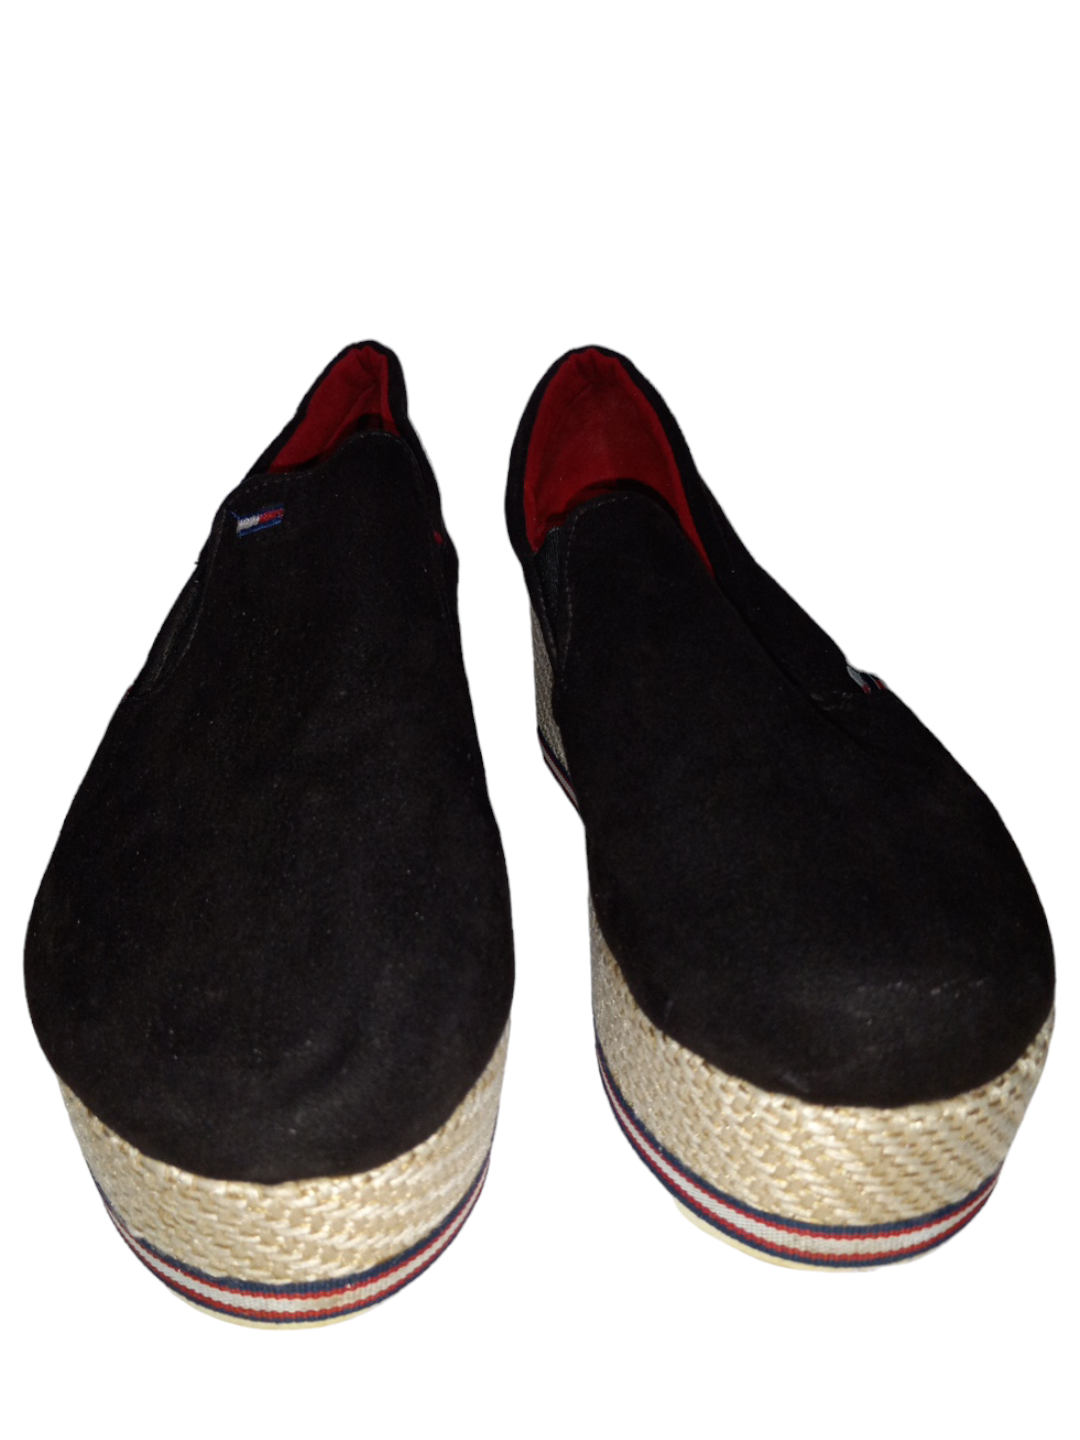 Shoes Heels Platform By Tommy Hilfiger  Size: 8